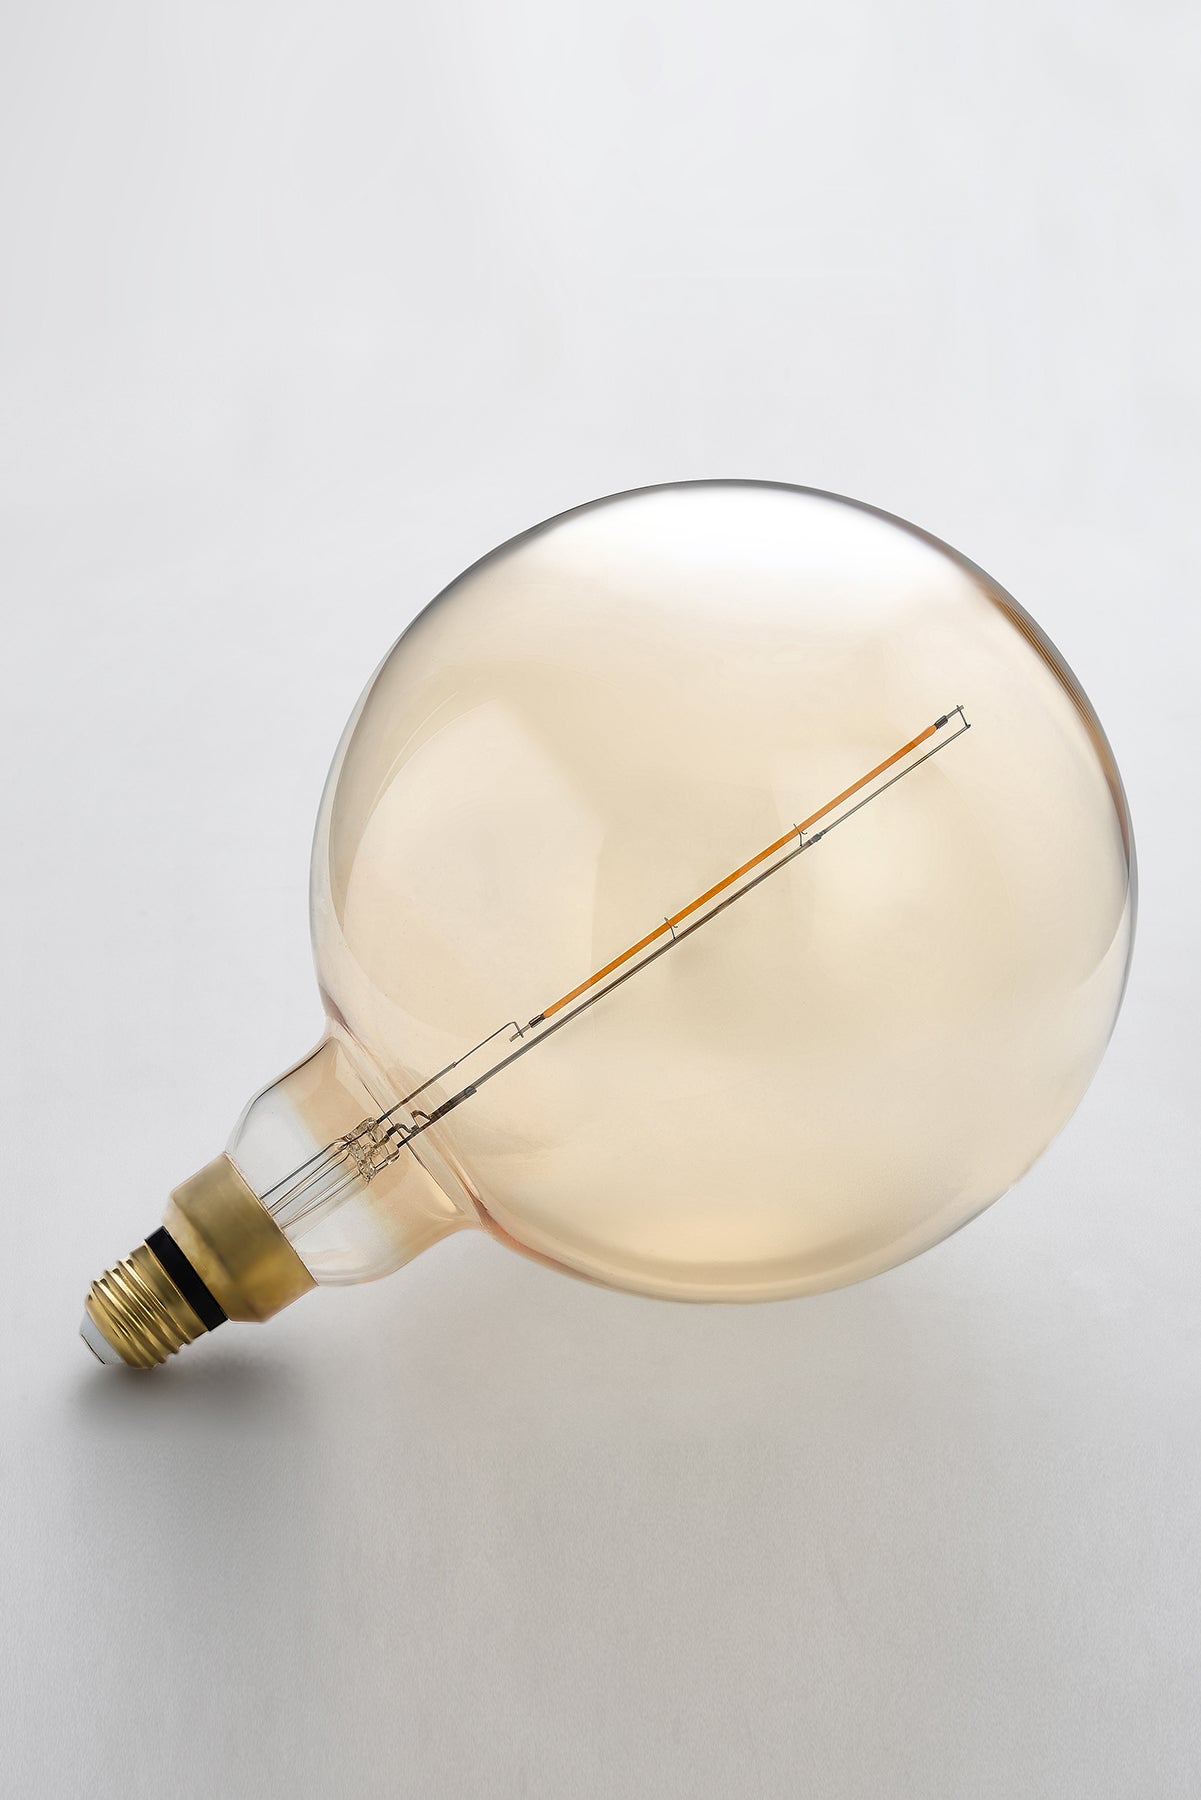 Modern globe LED light bulb with warm vintage Edison style glow